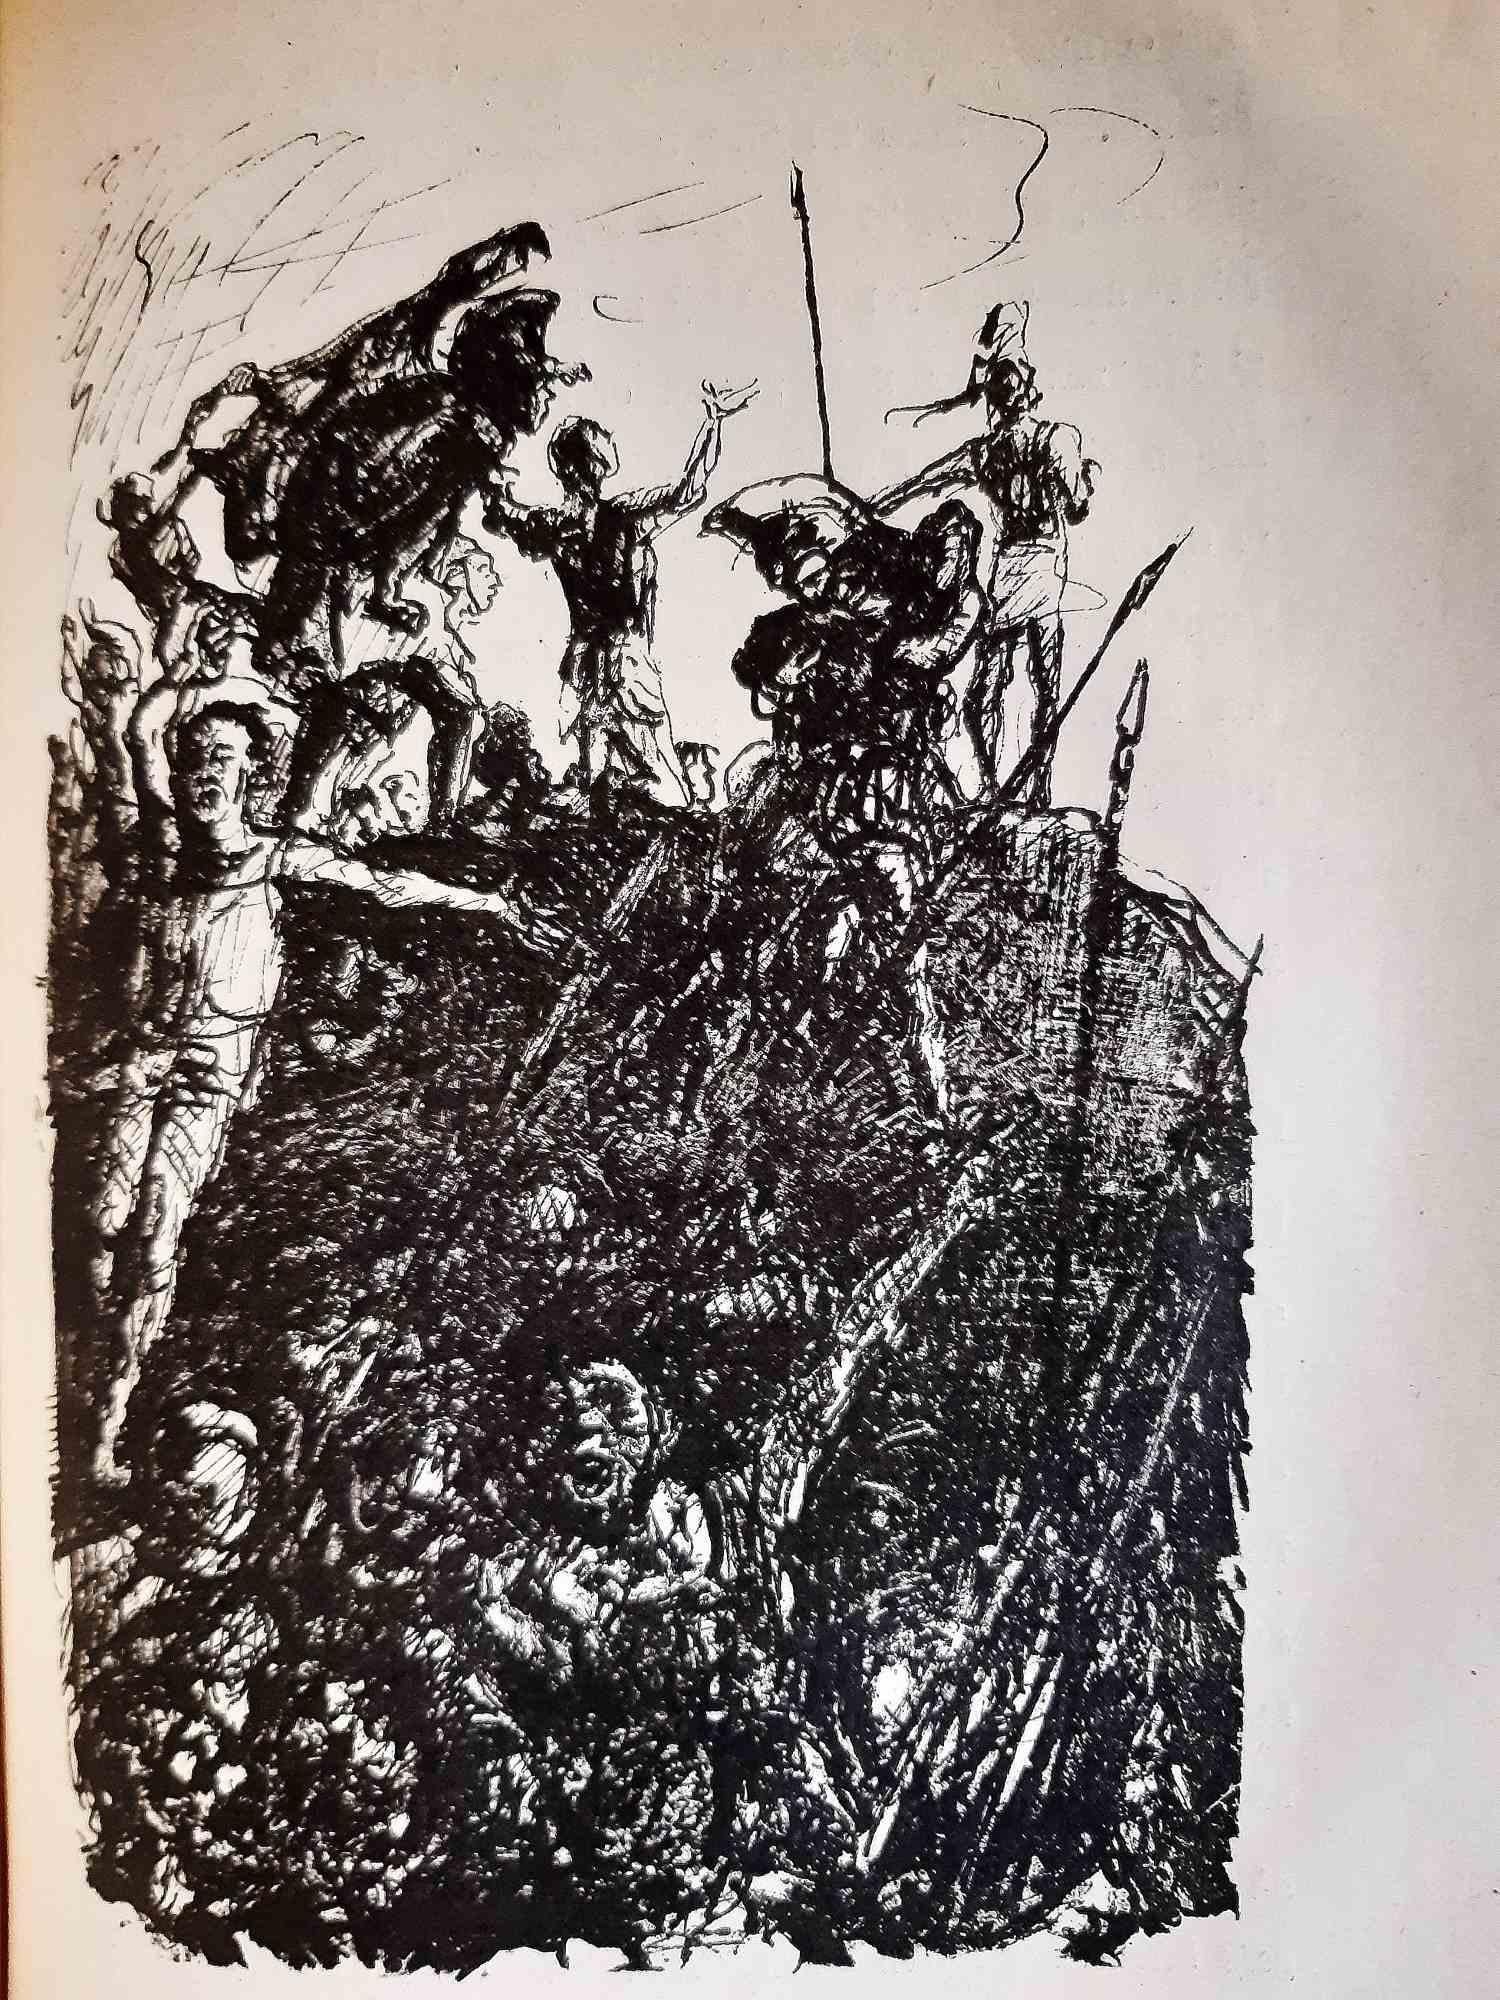 Die Tapferen Zehntausend - Original Rare Book Illustrated by Max Slevogt - 1921 For Sale 4